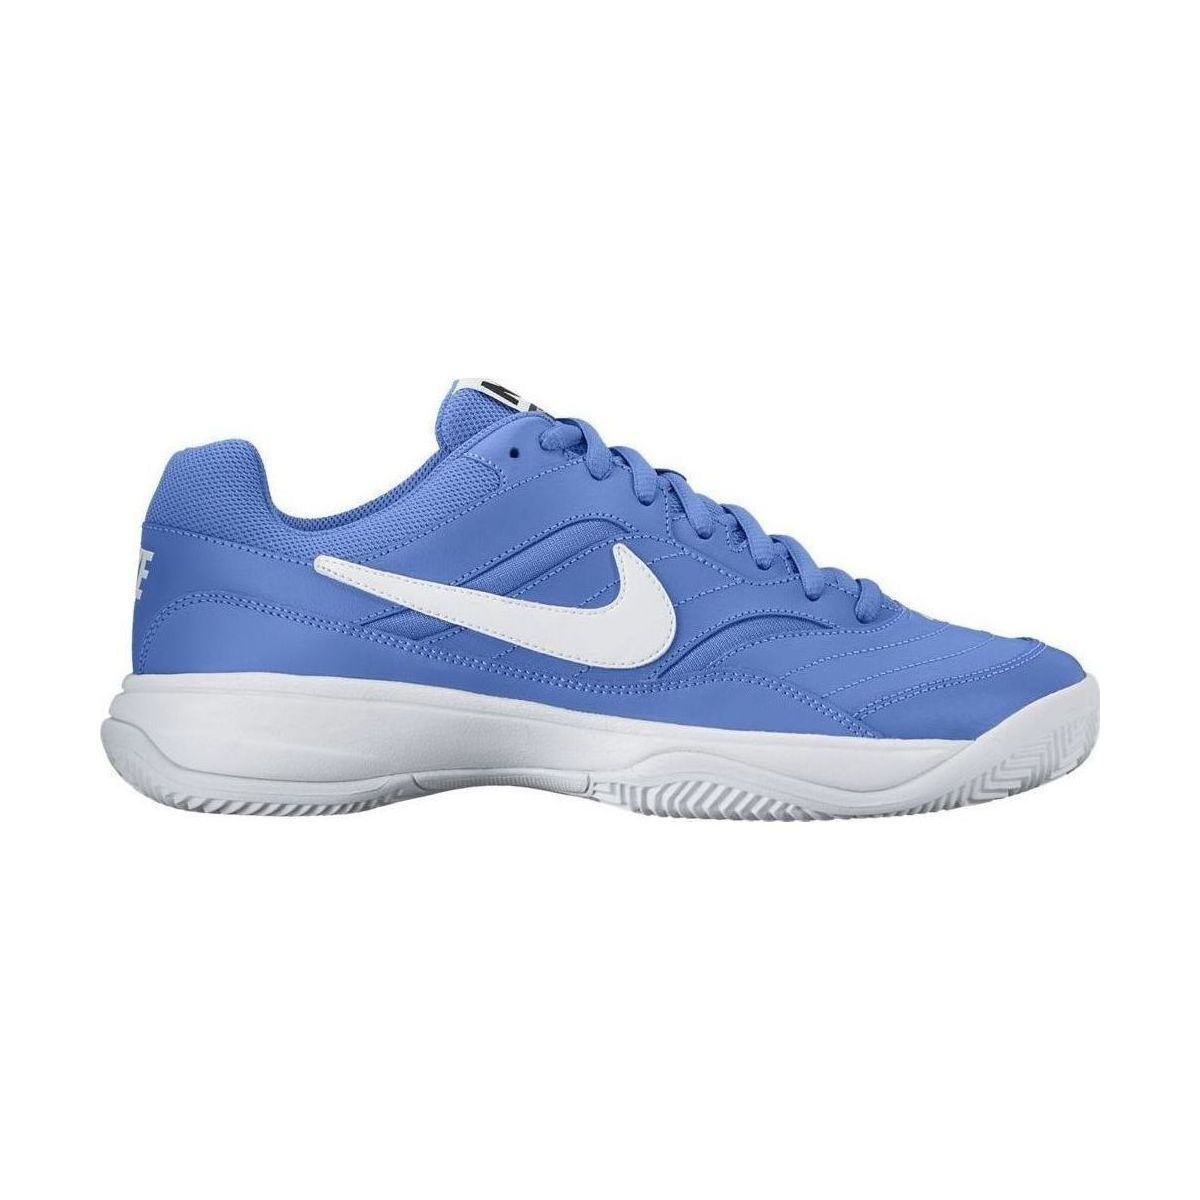 Nike Court Lite Clay Men's Tennis Shoes 845026-400